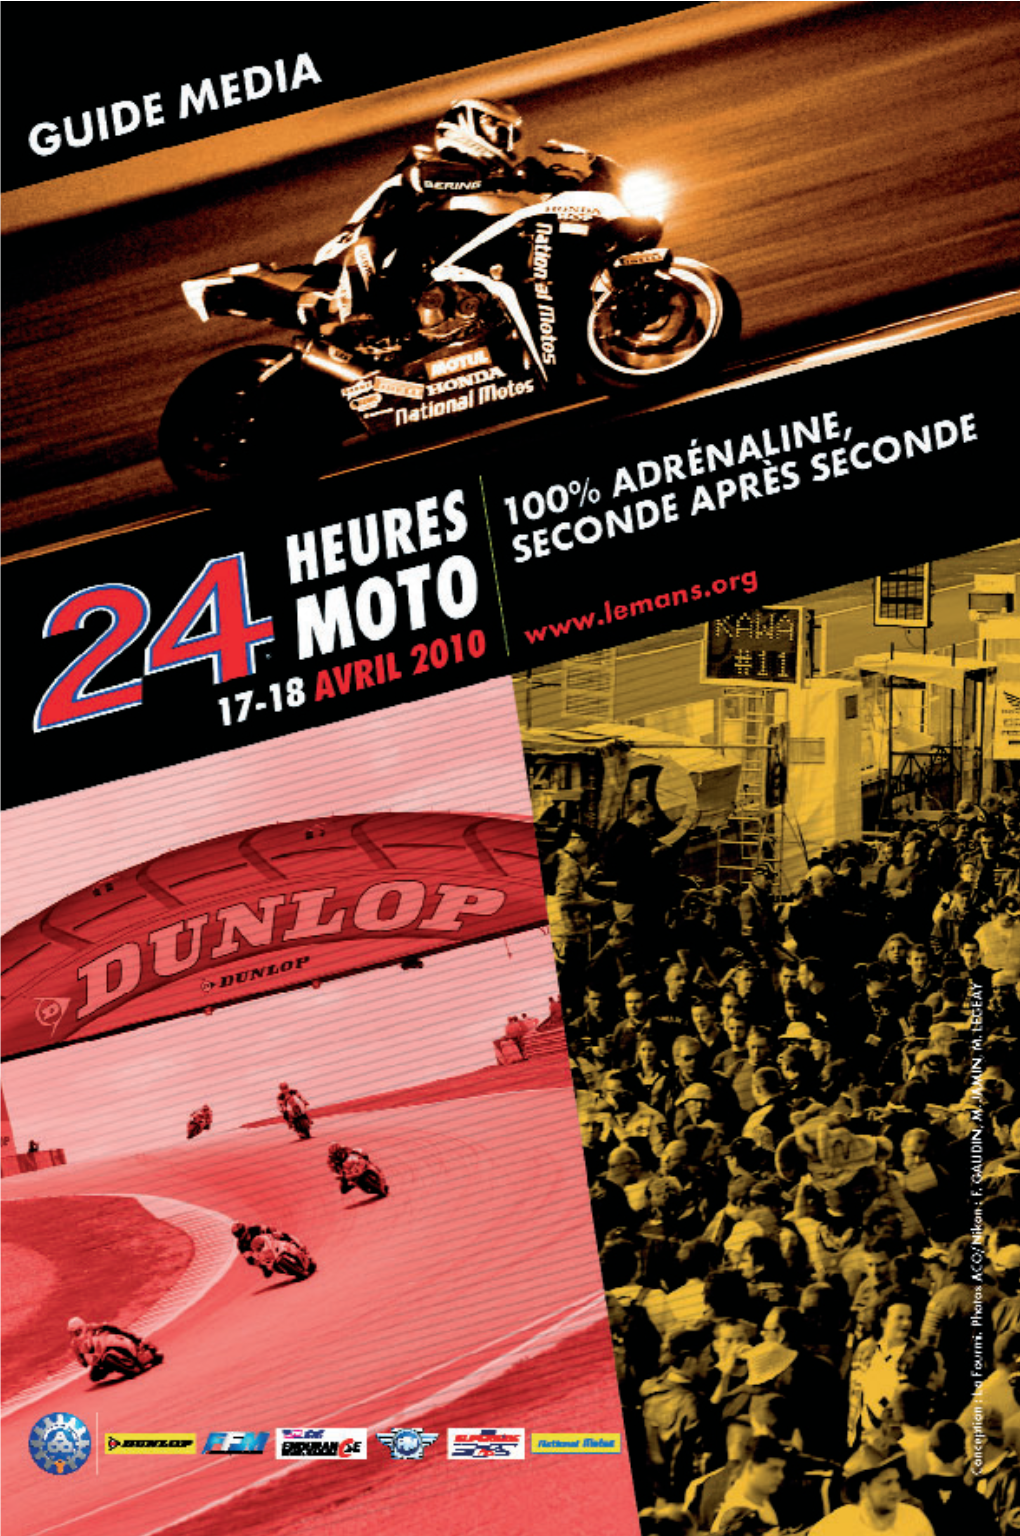 24 Heures Moto 2010 - Guide Media